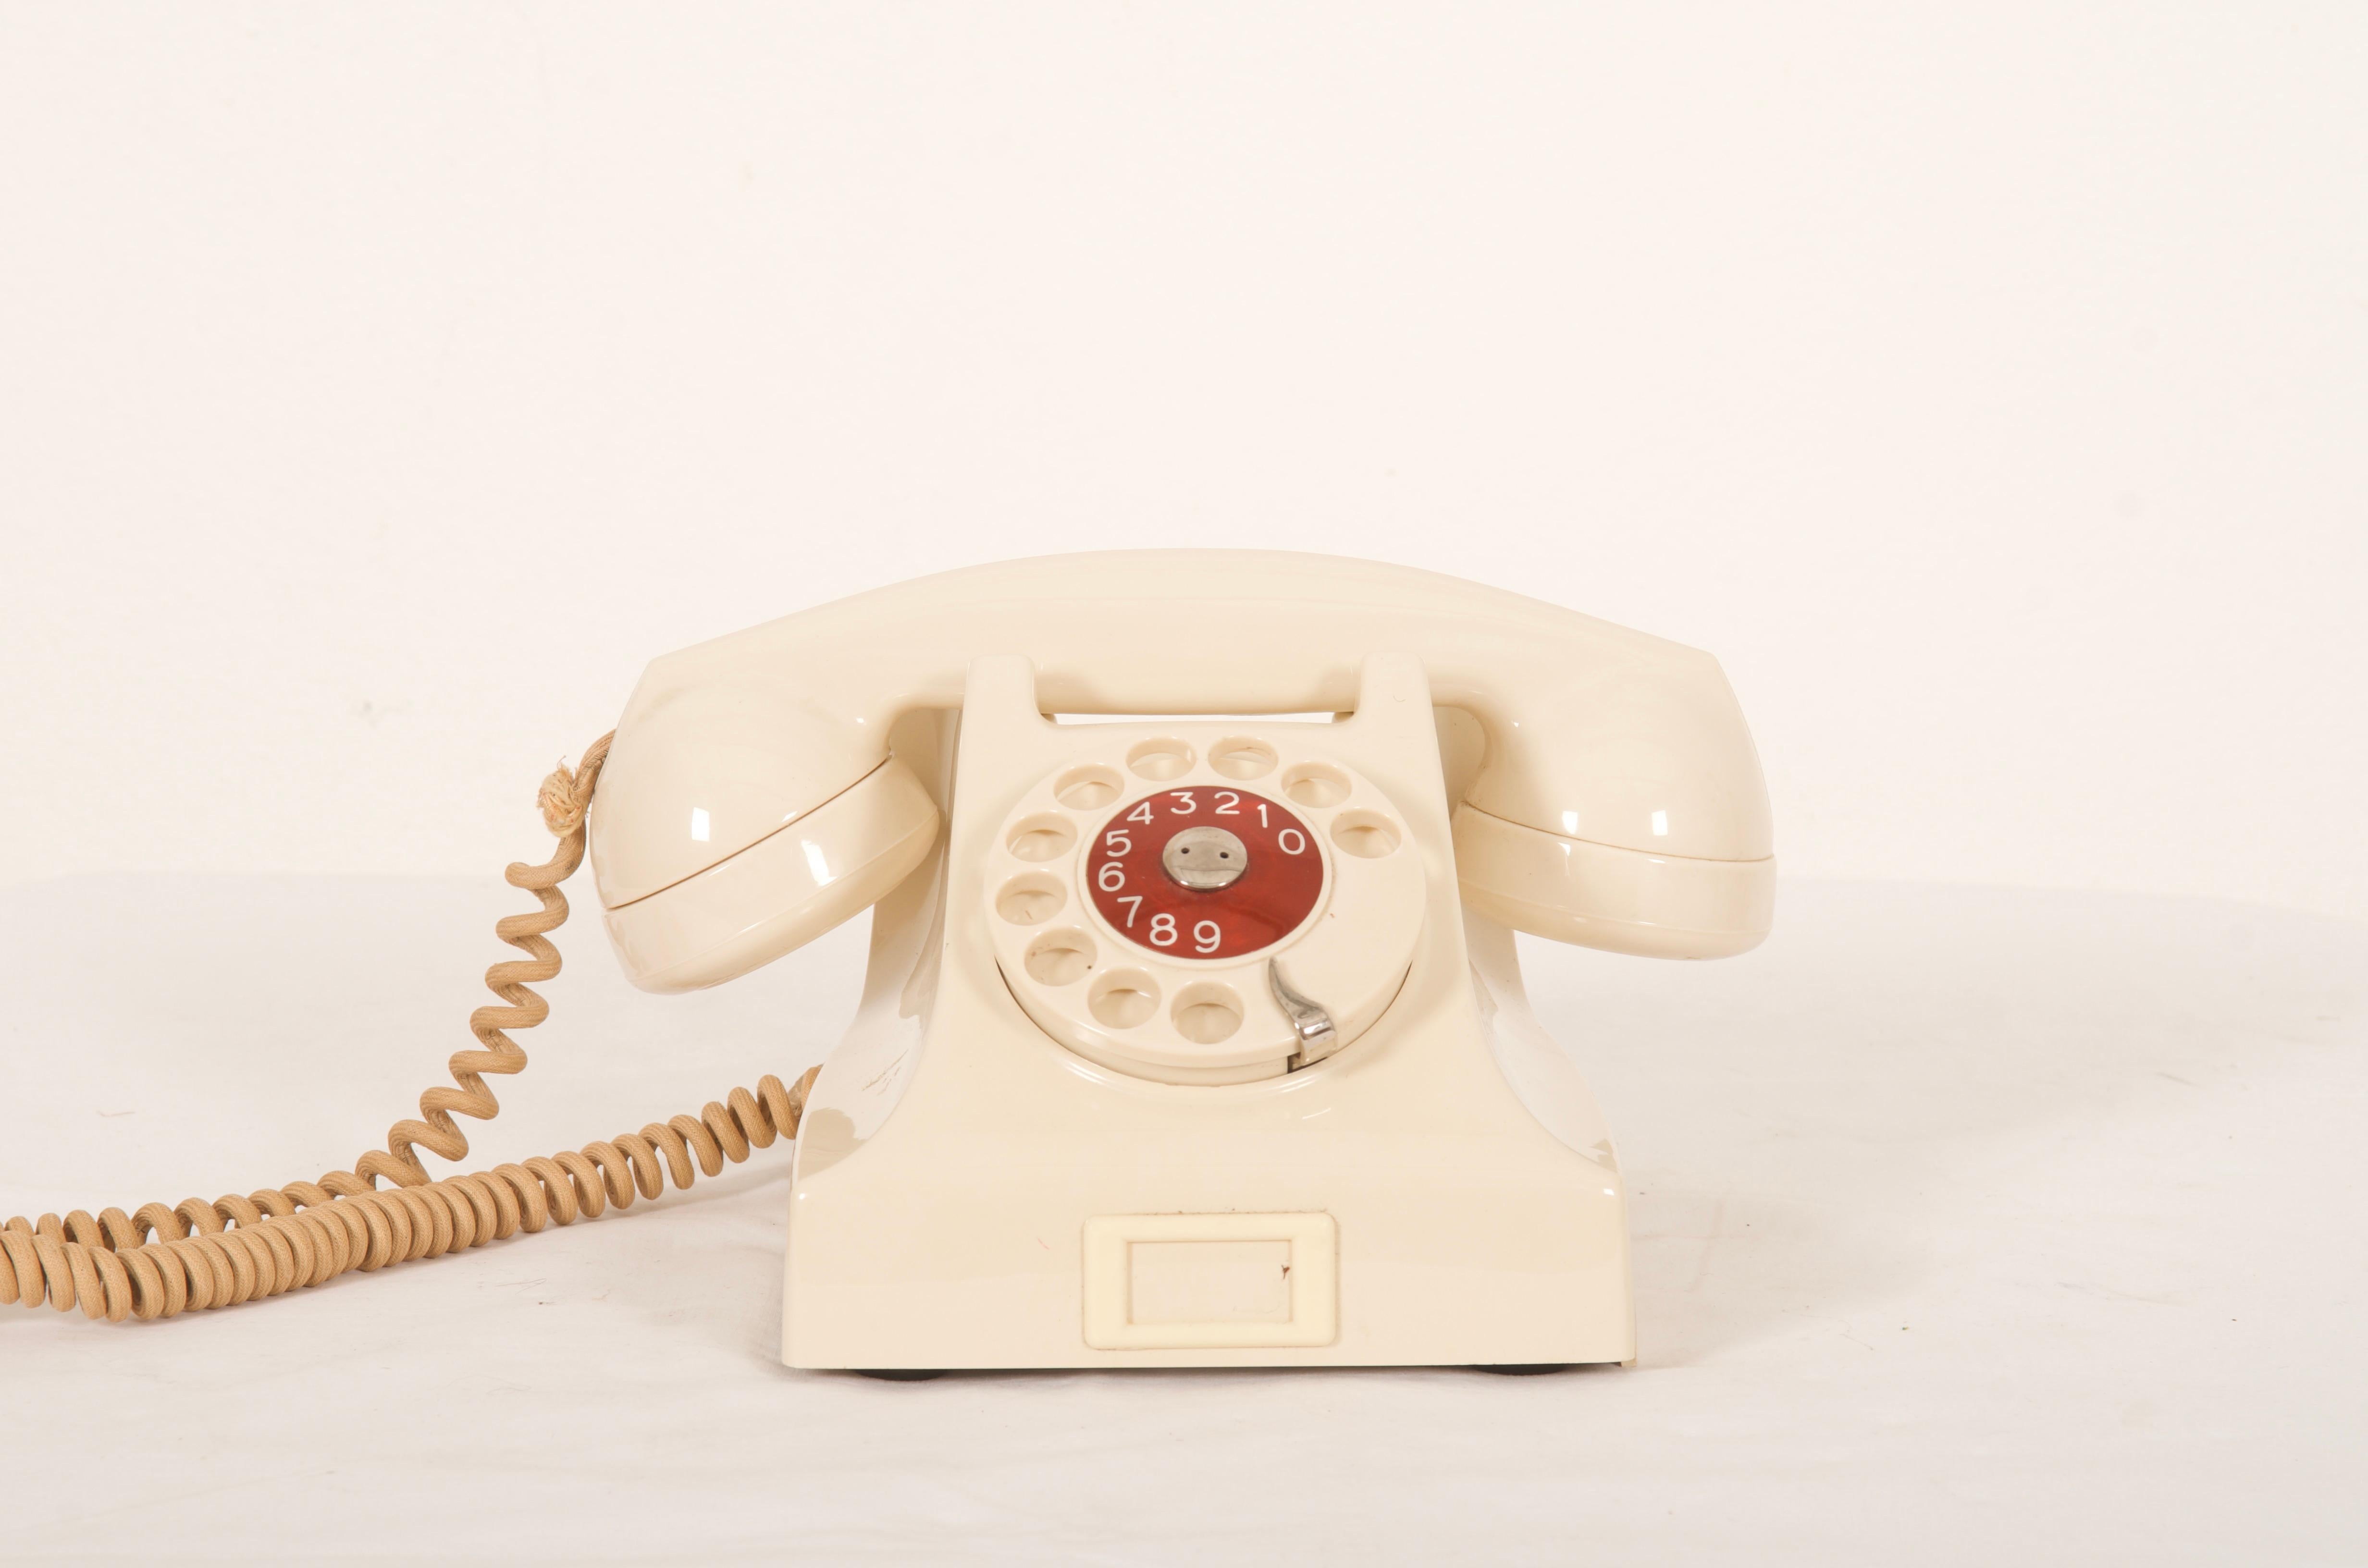 Mid-Century Modern Phone suédois vintage de table en bakélite beige en vente